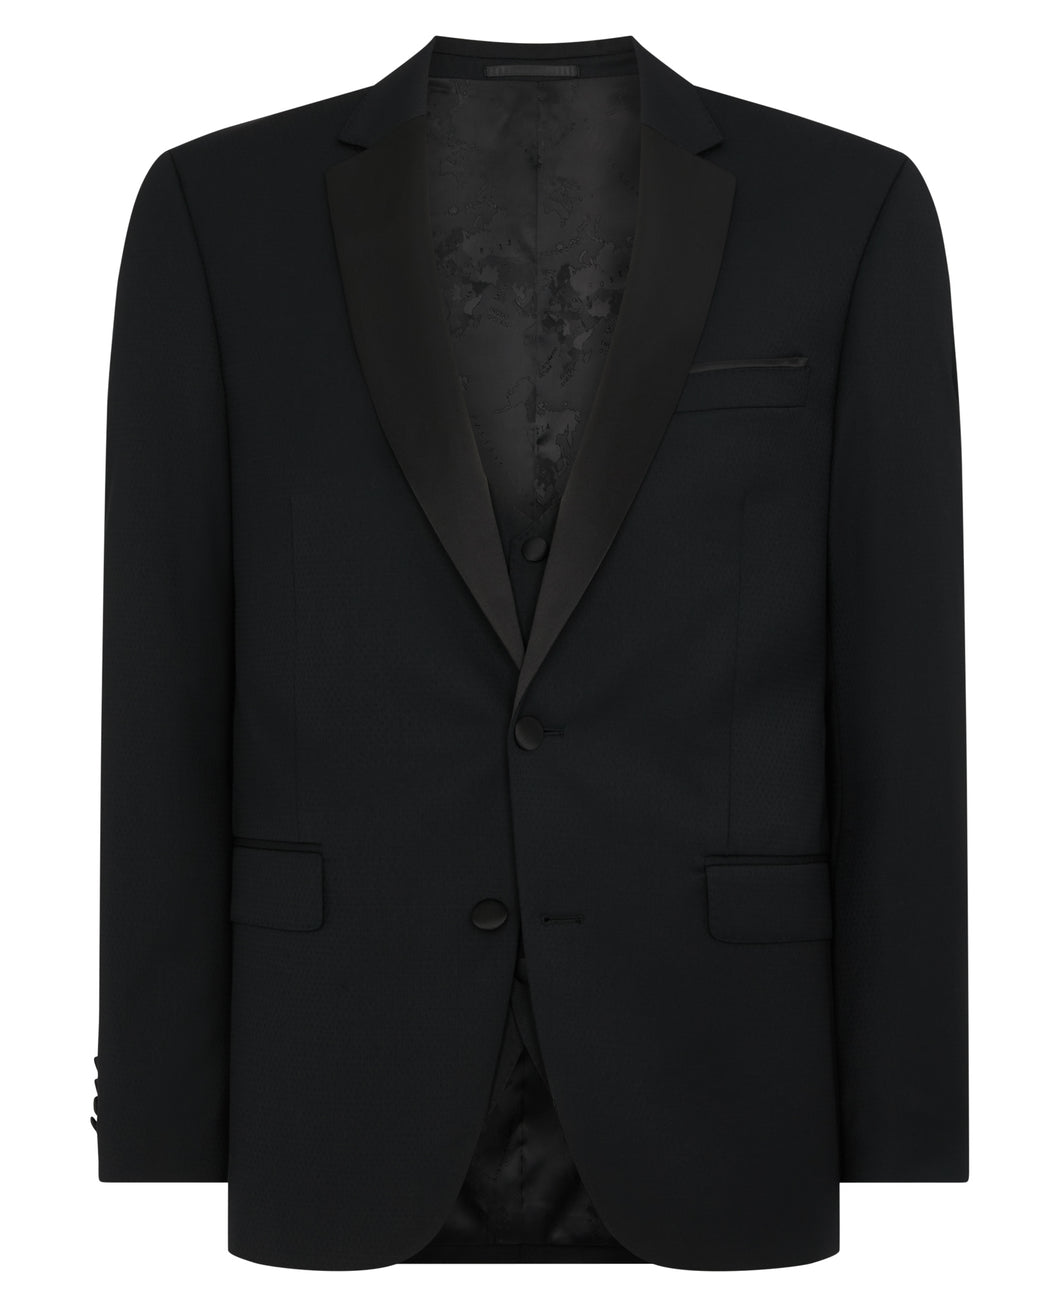 REMUS UOMO Black Dinner Suit Jacket 524 40754 Paco